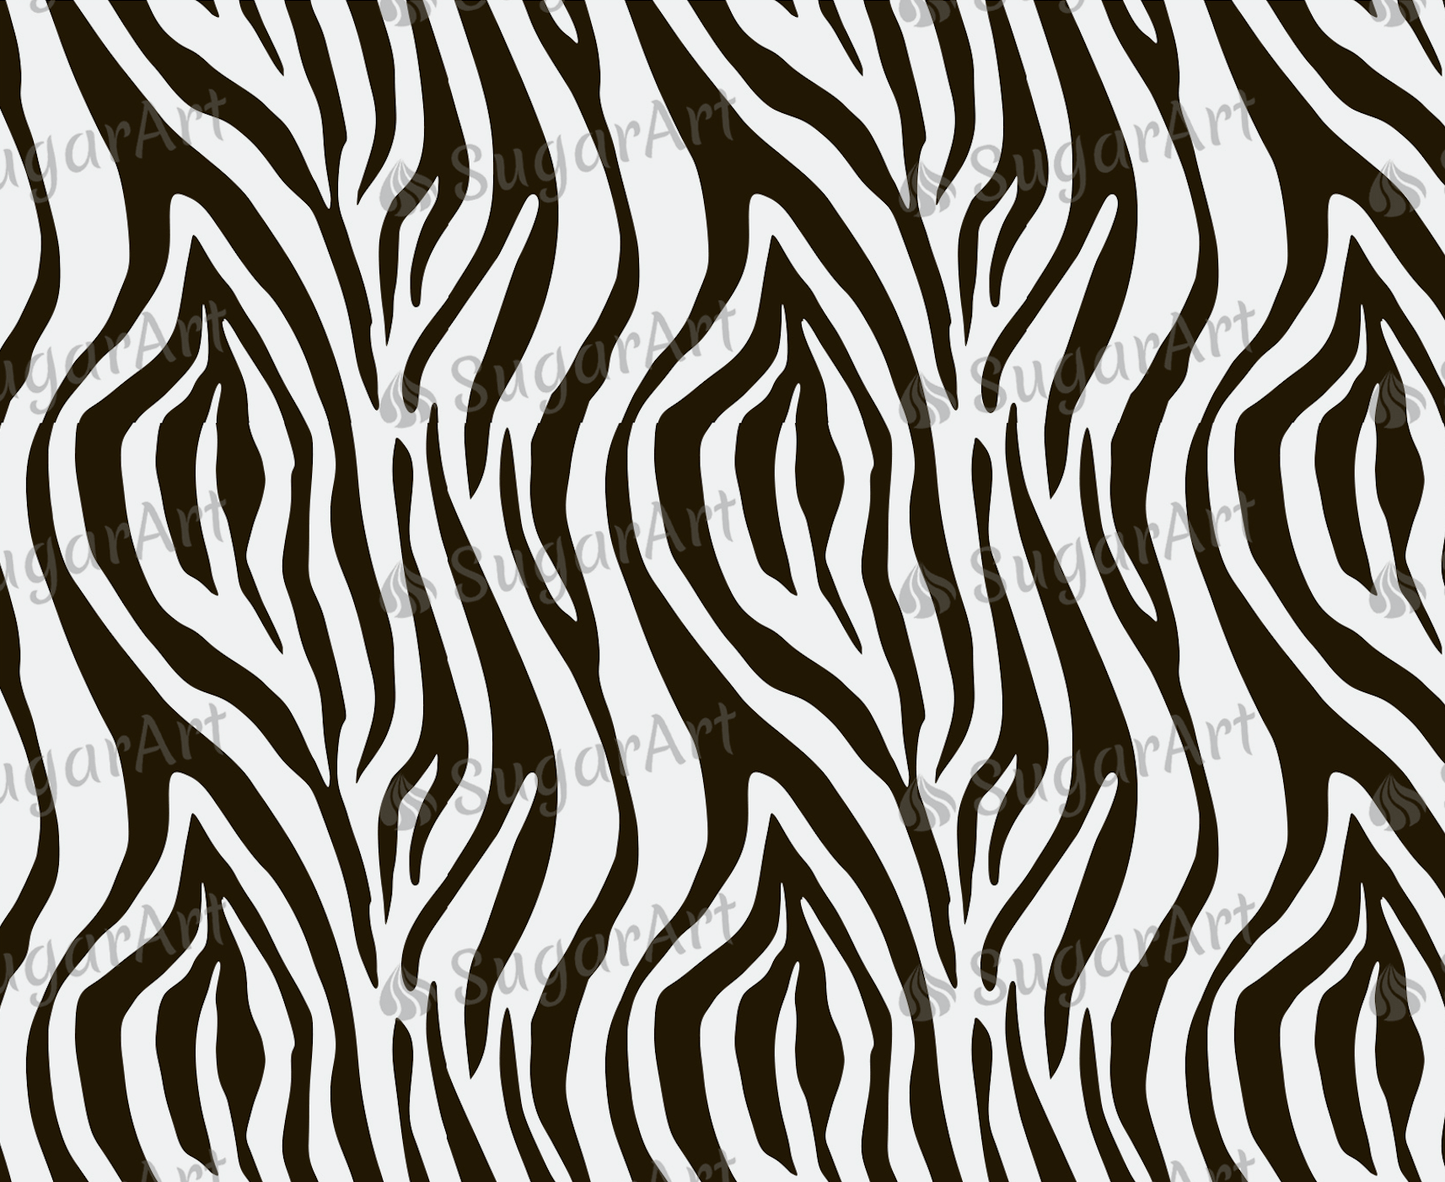 Zebra Print in Black and White - Icing - ISA040.